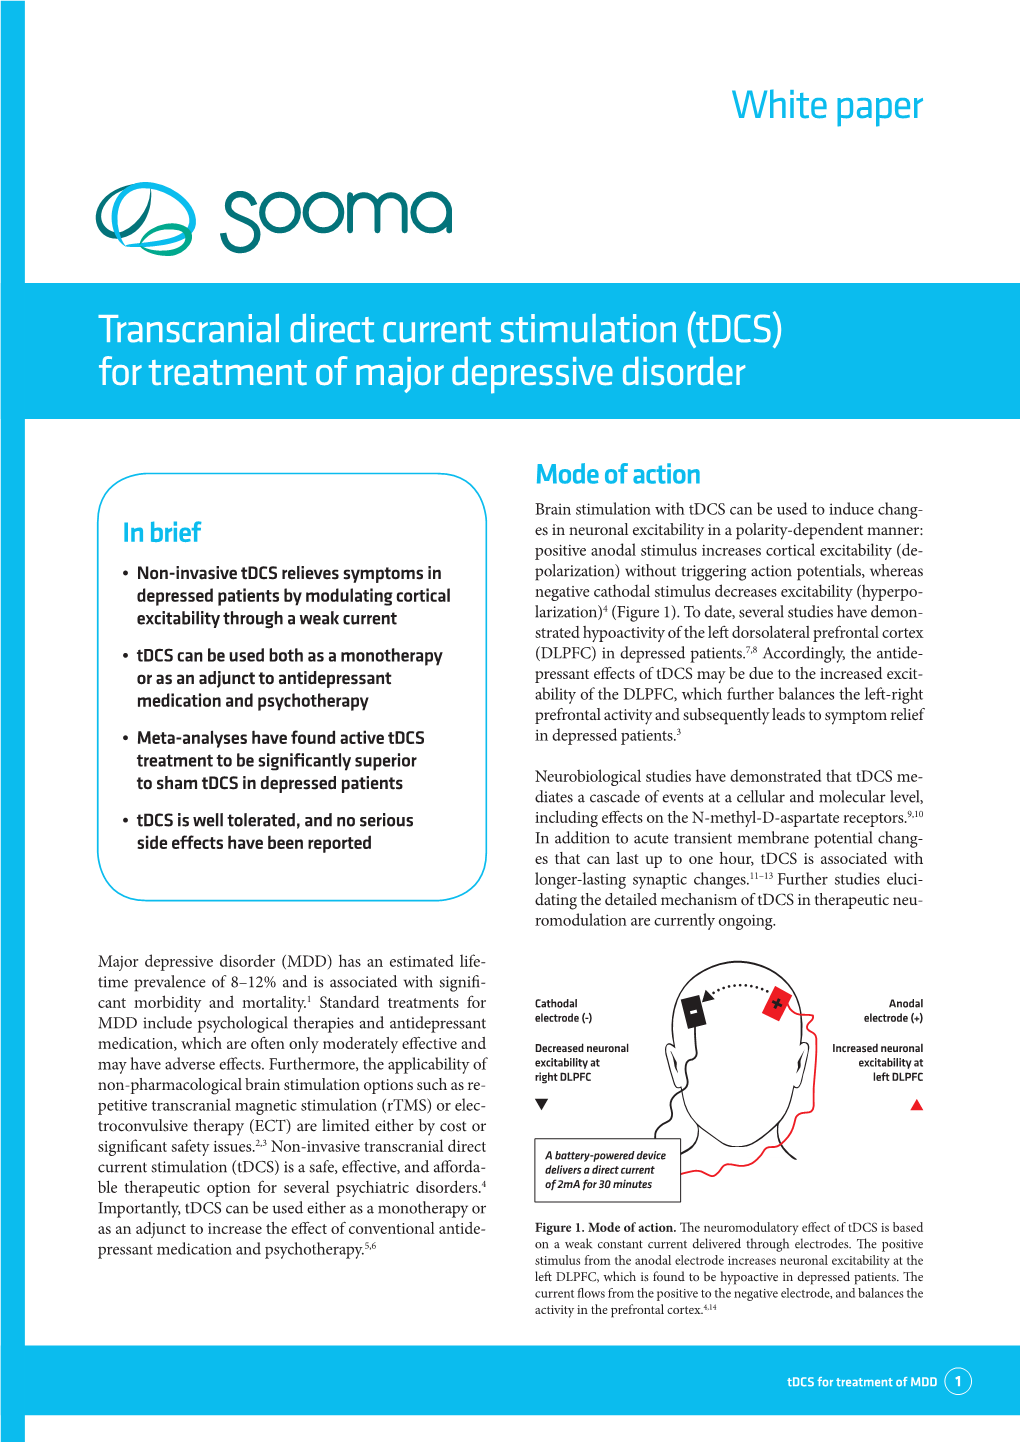 Transcranial Direct Current Stimulation (Tdcs) for Treatment of Major Depressive Disorder